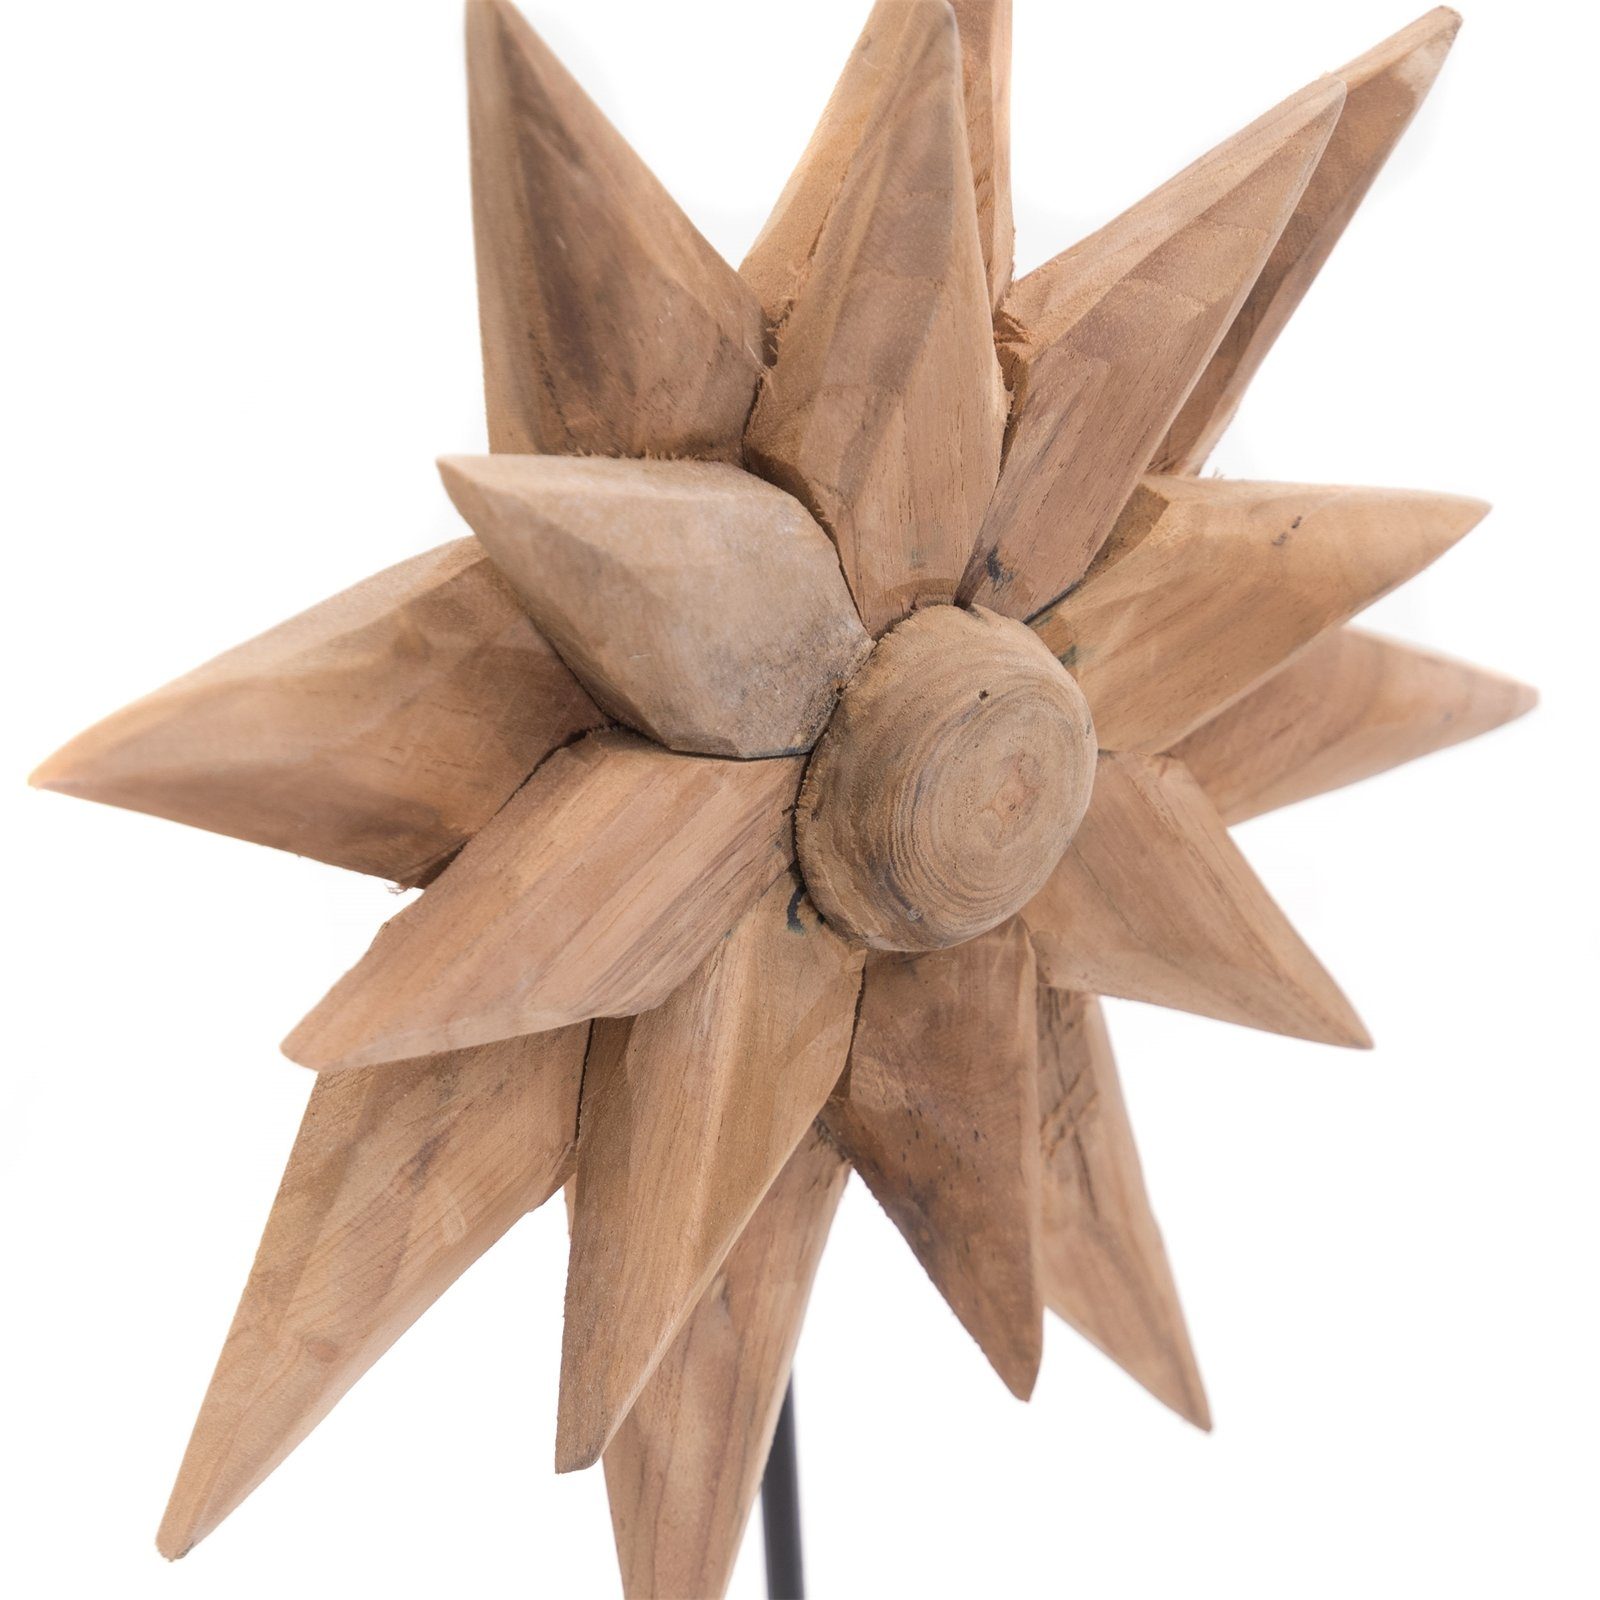 TEAK "SUNFLOWER", Blume 2-teilig, CREEDWOOD Aufsteller SKULPTUR Skulptur Holz